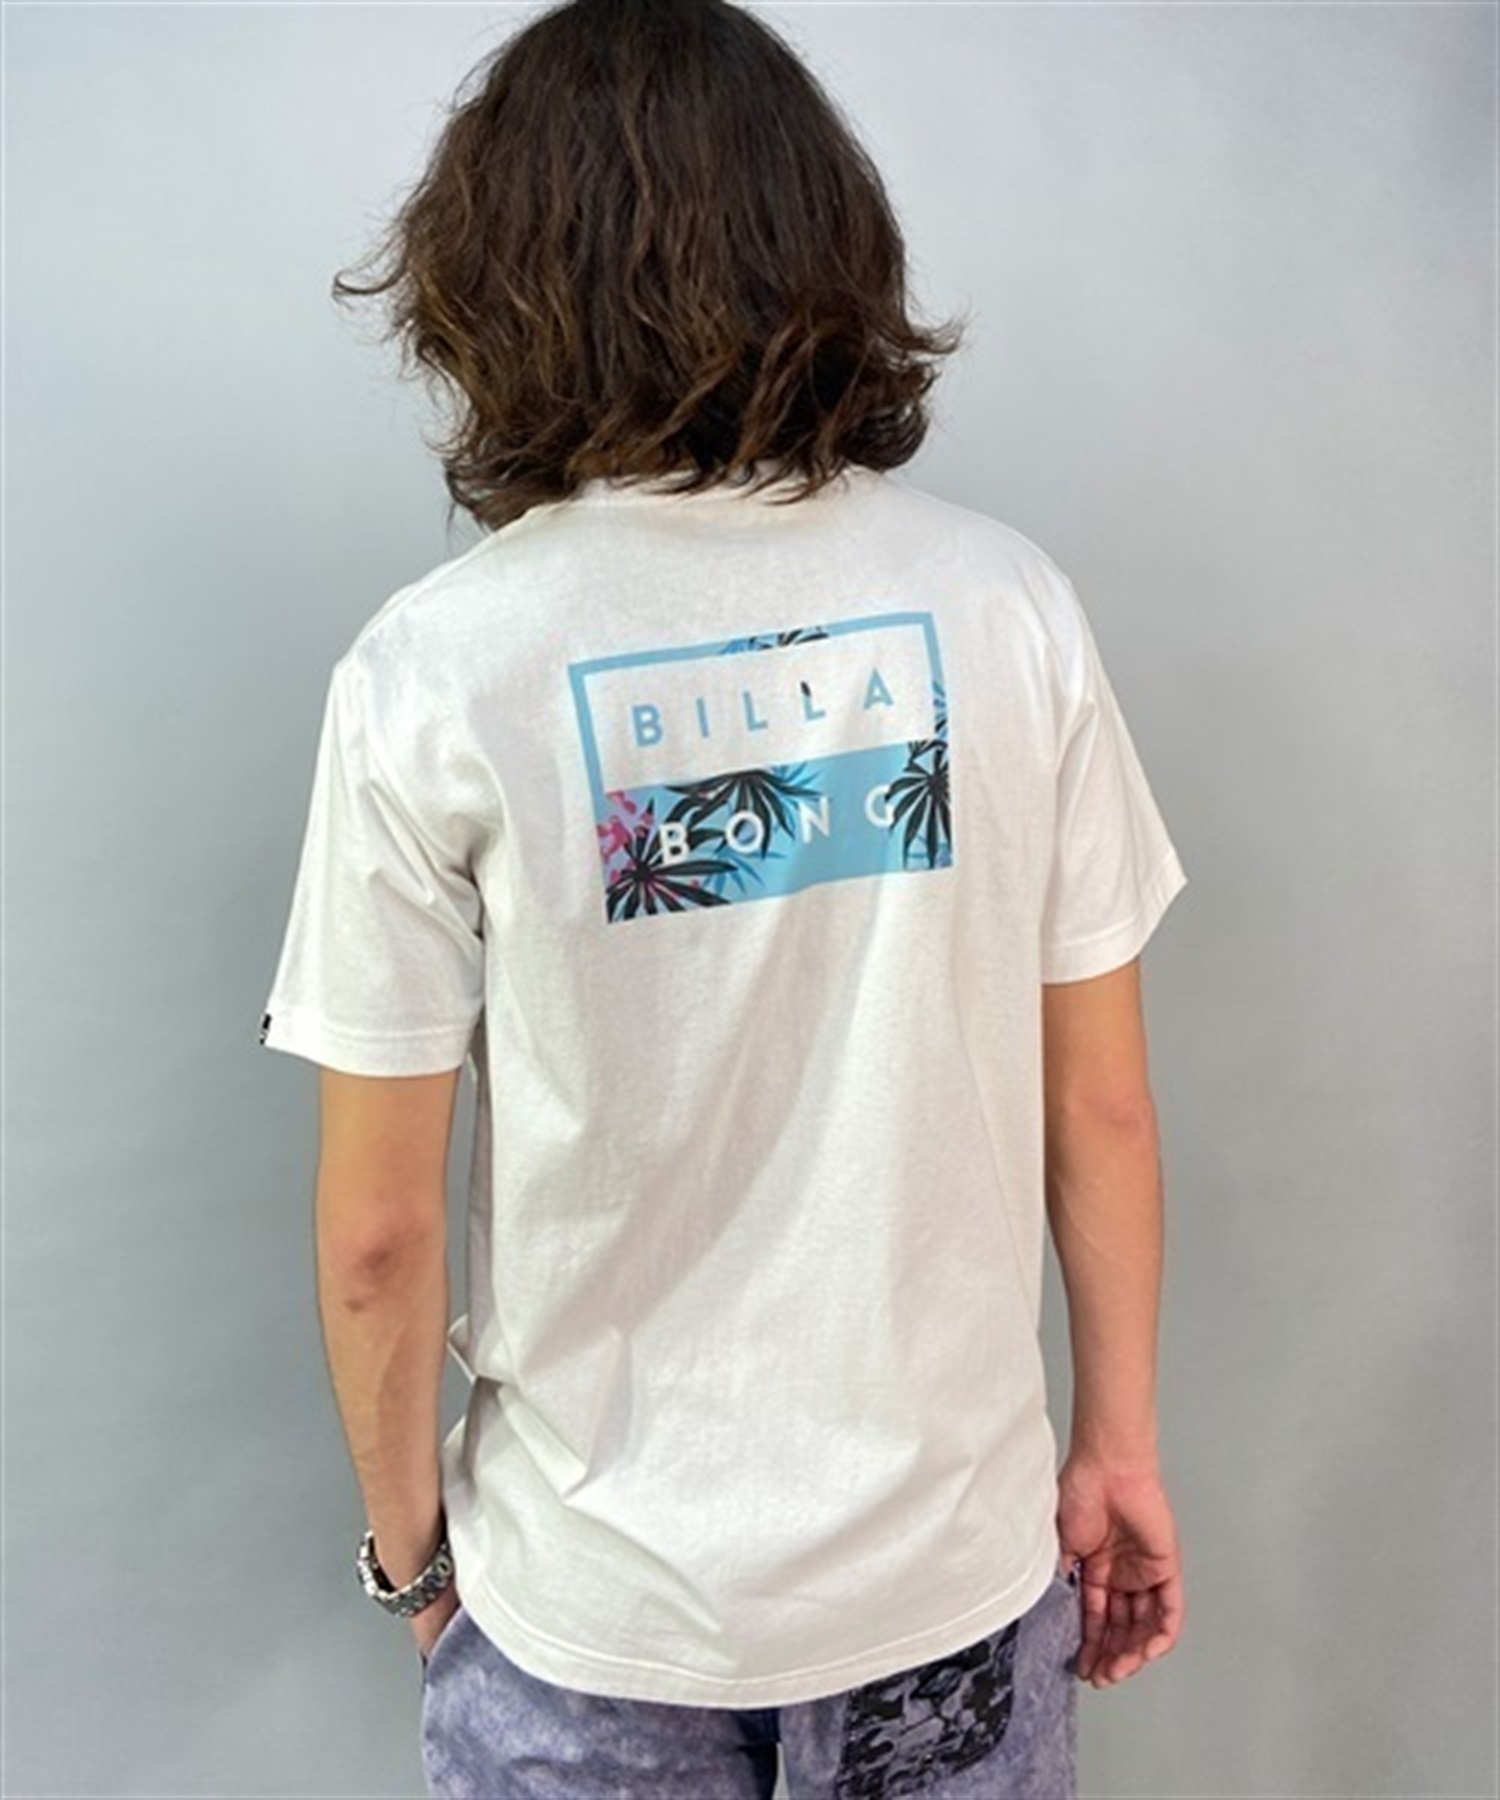 BILLABONG ビラボン DECAL CUT BD011-203 メンズ 半袖 Tシャツ バックプリント KX1 B25(WHT-S)